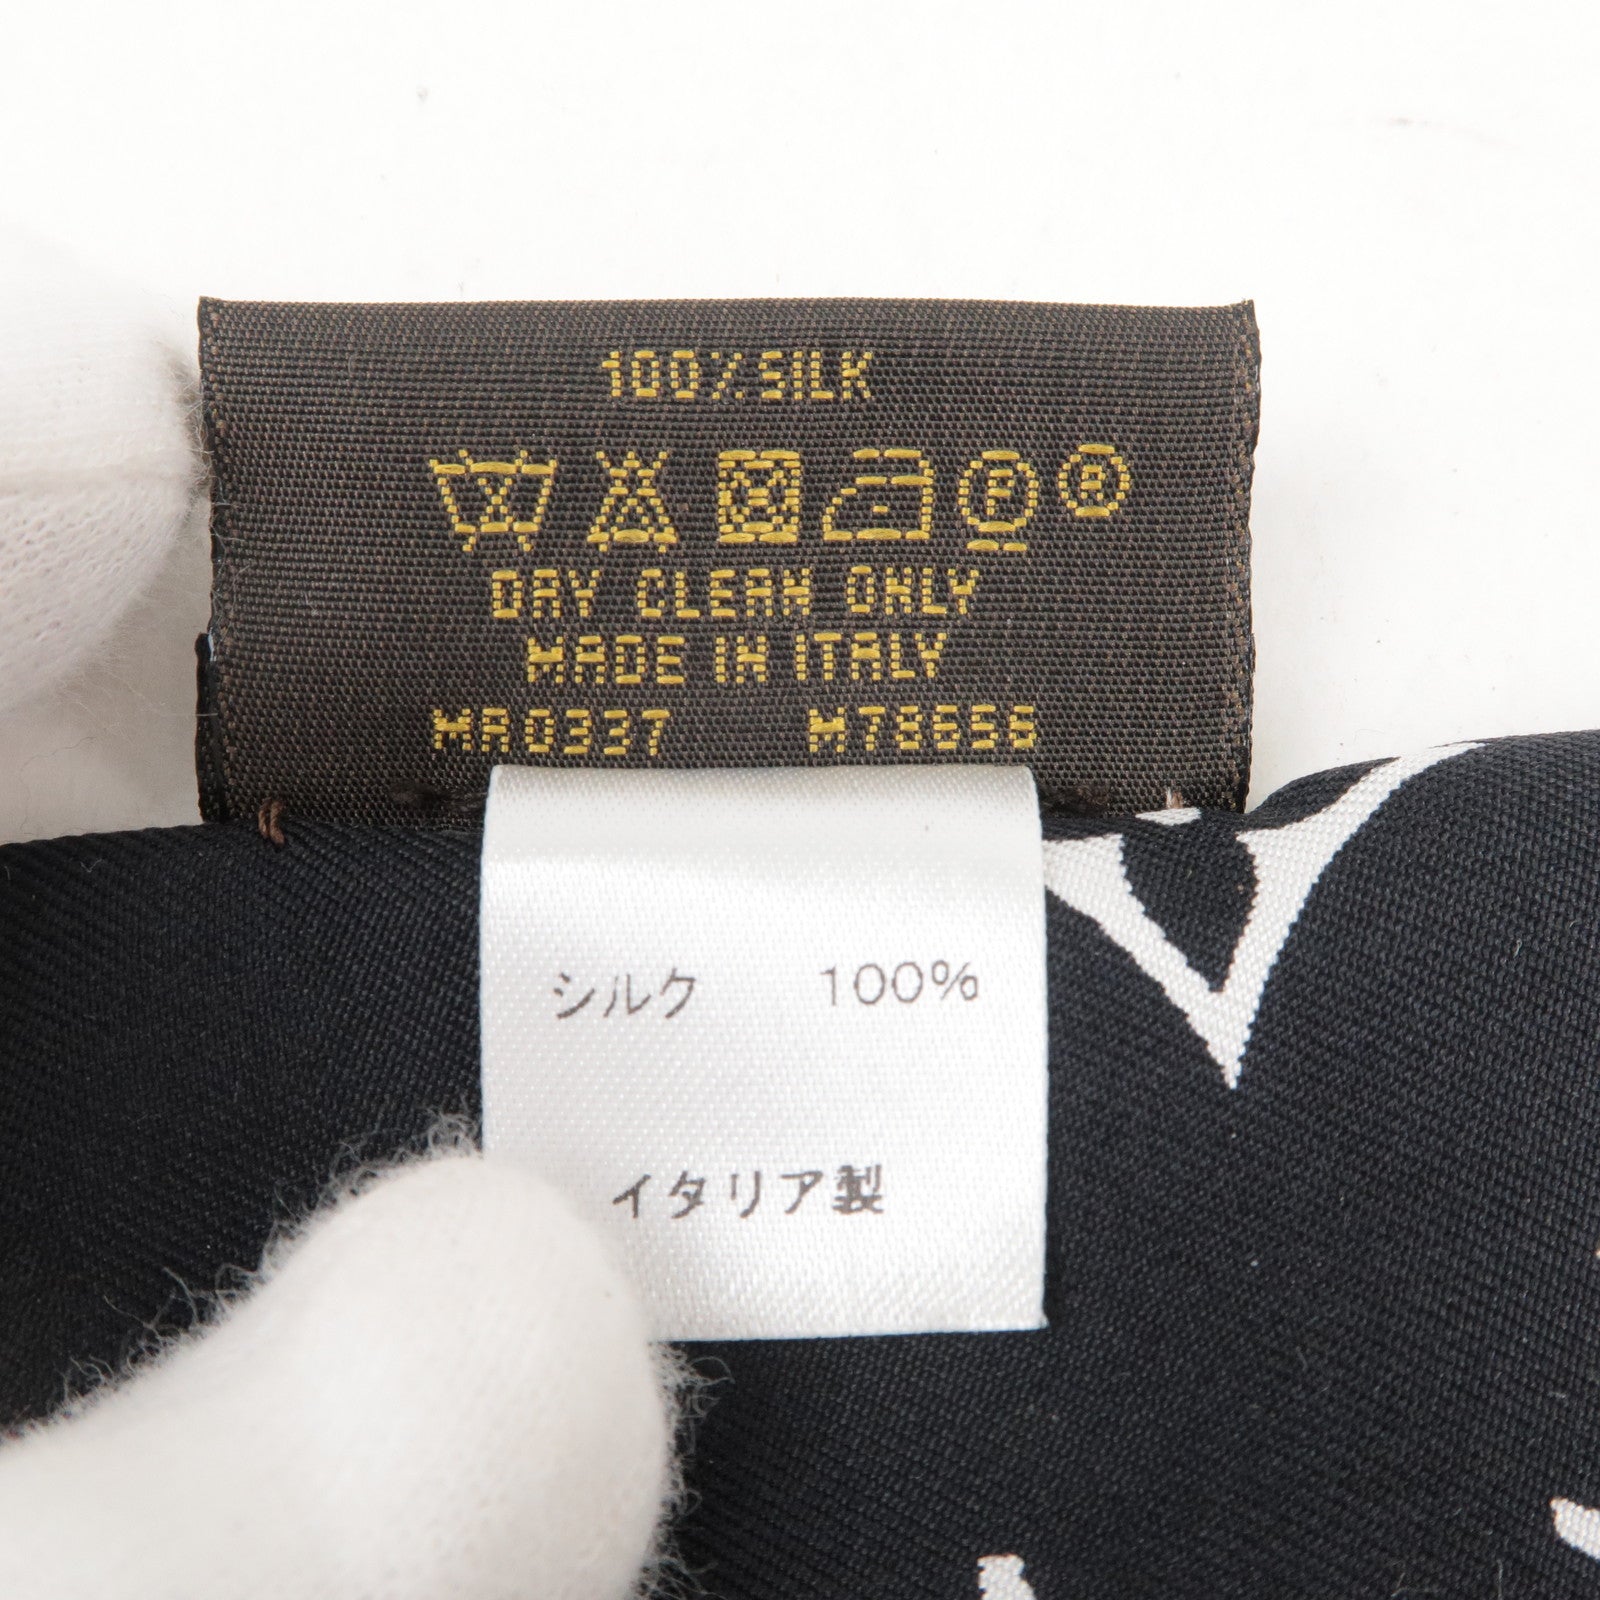 Louis Vuitton M78656 Silk Scarf Bandeau Confidential Monogram Used